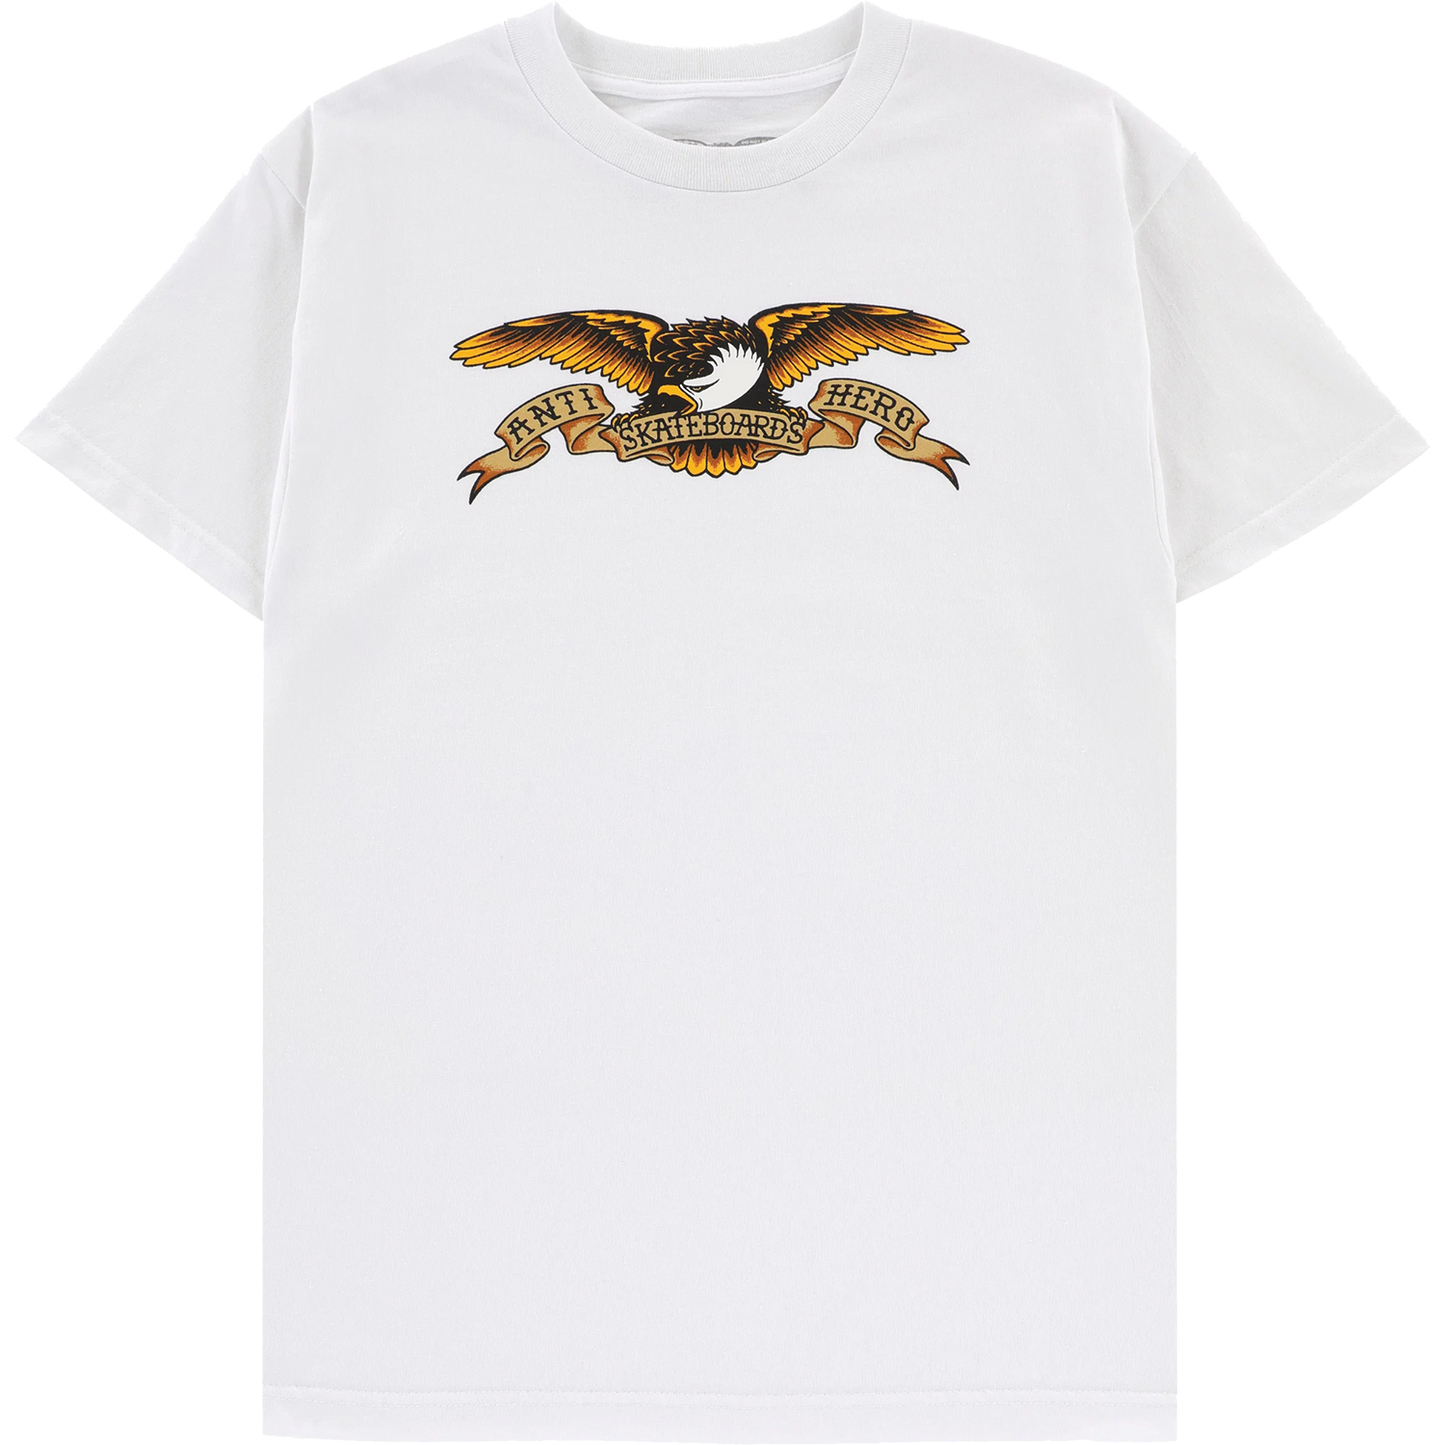 Antihero Eagle T-Shirt - Size: X-LARGE White/Blue Multi